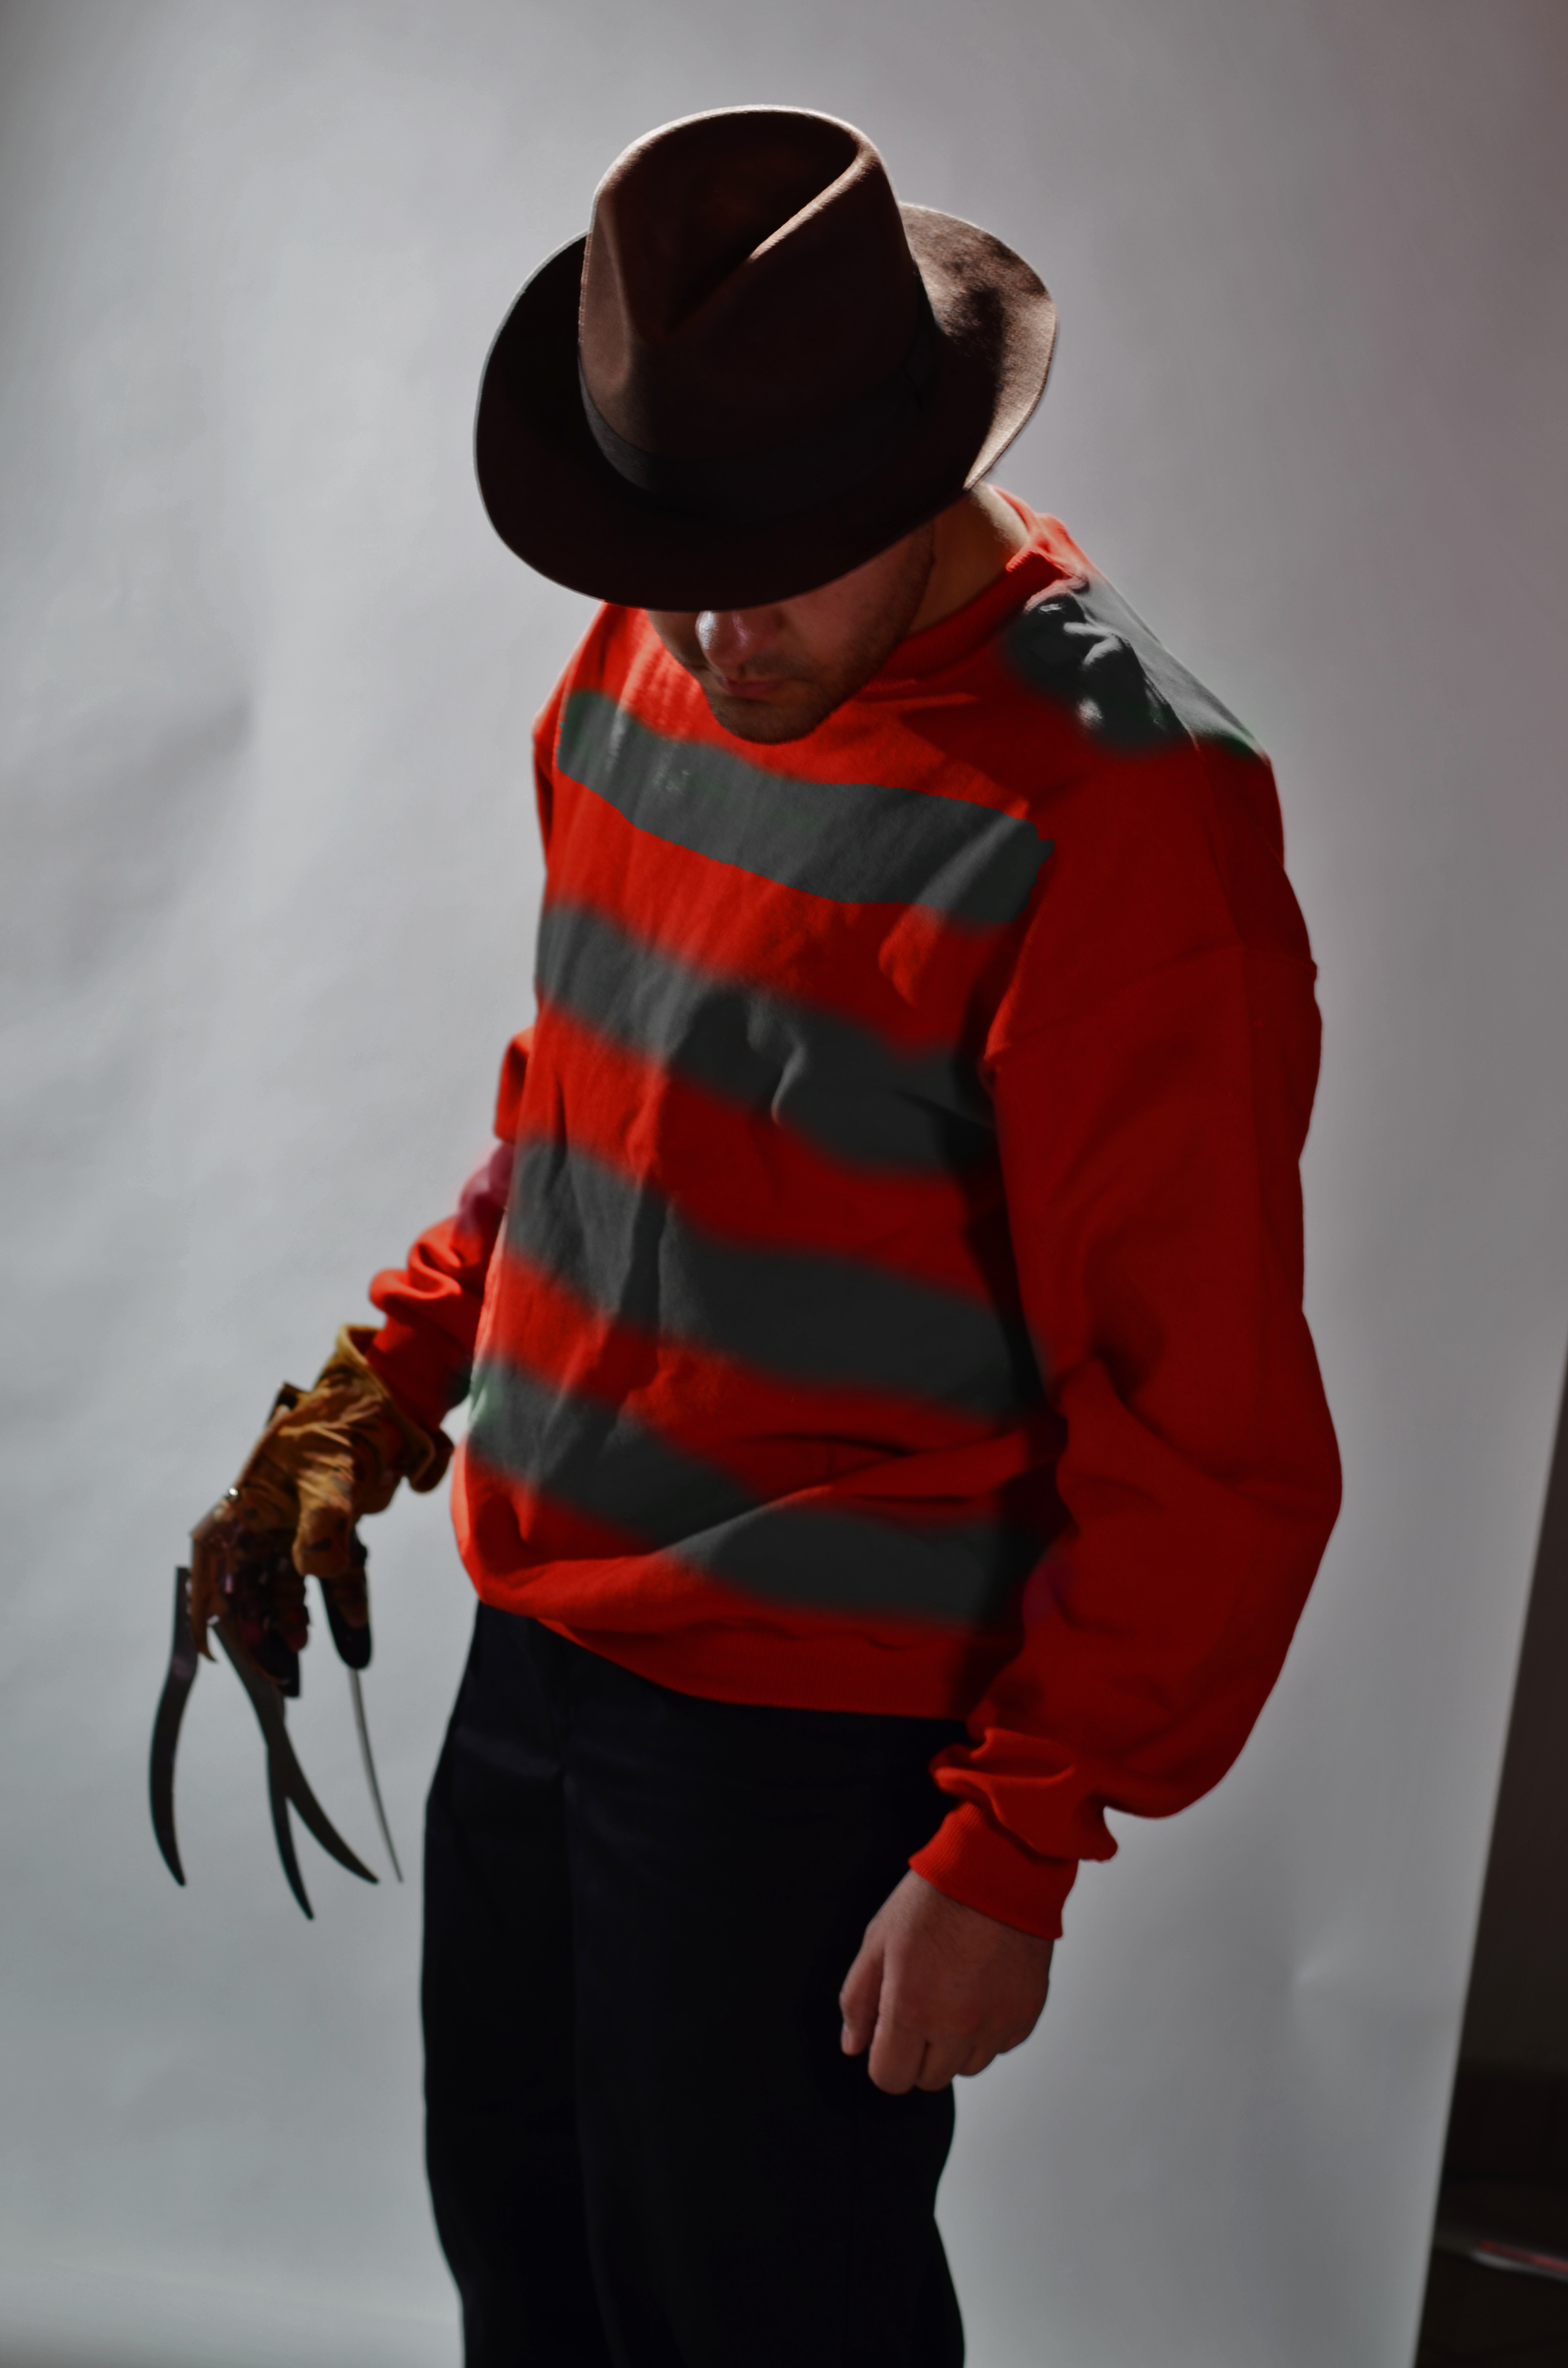 Arturo as Freddy Krueger